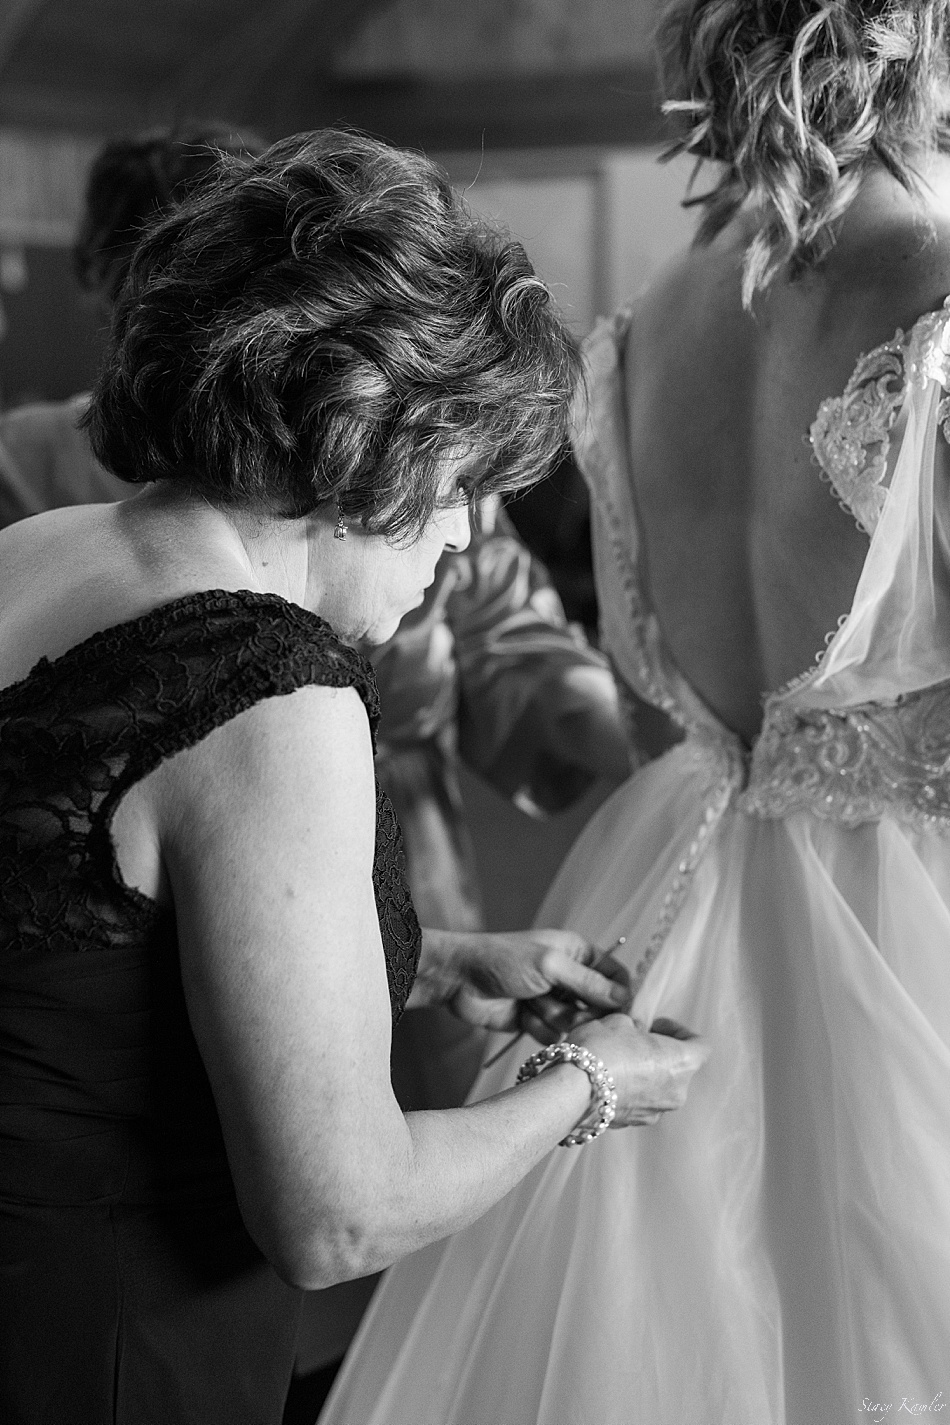 Mom buttoning up long sleeve wedding dress